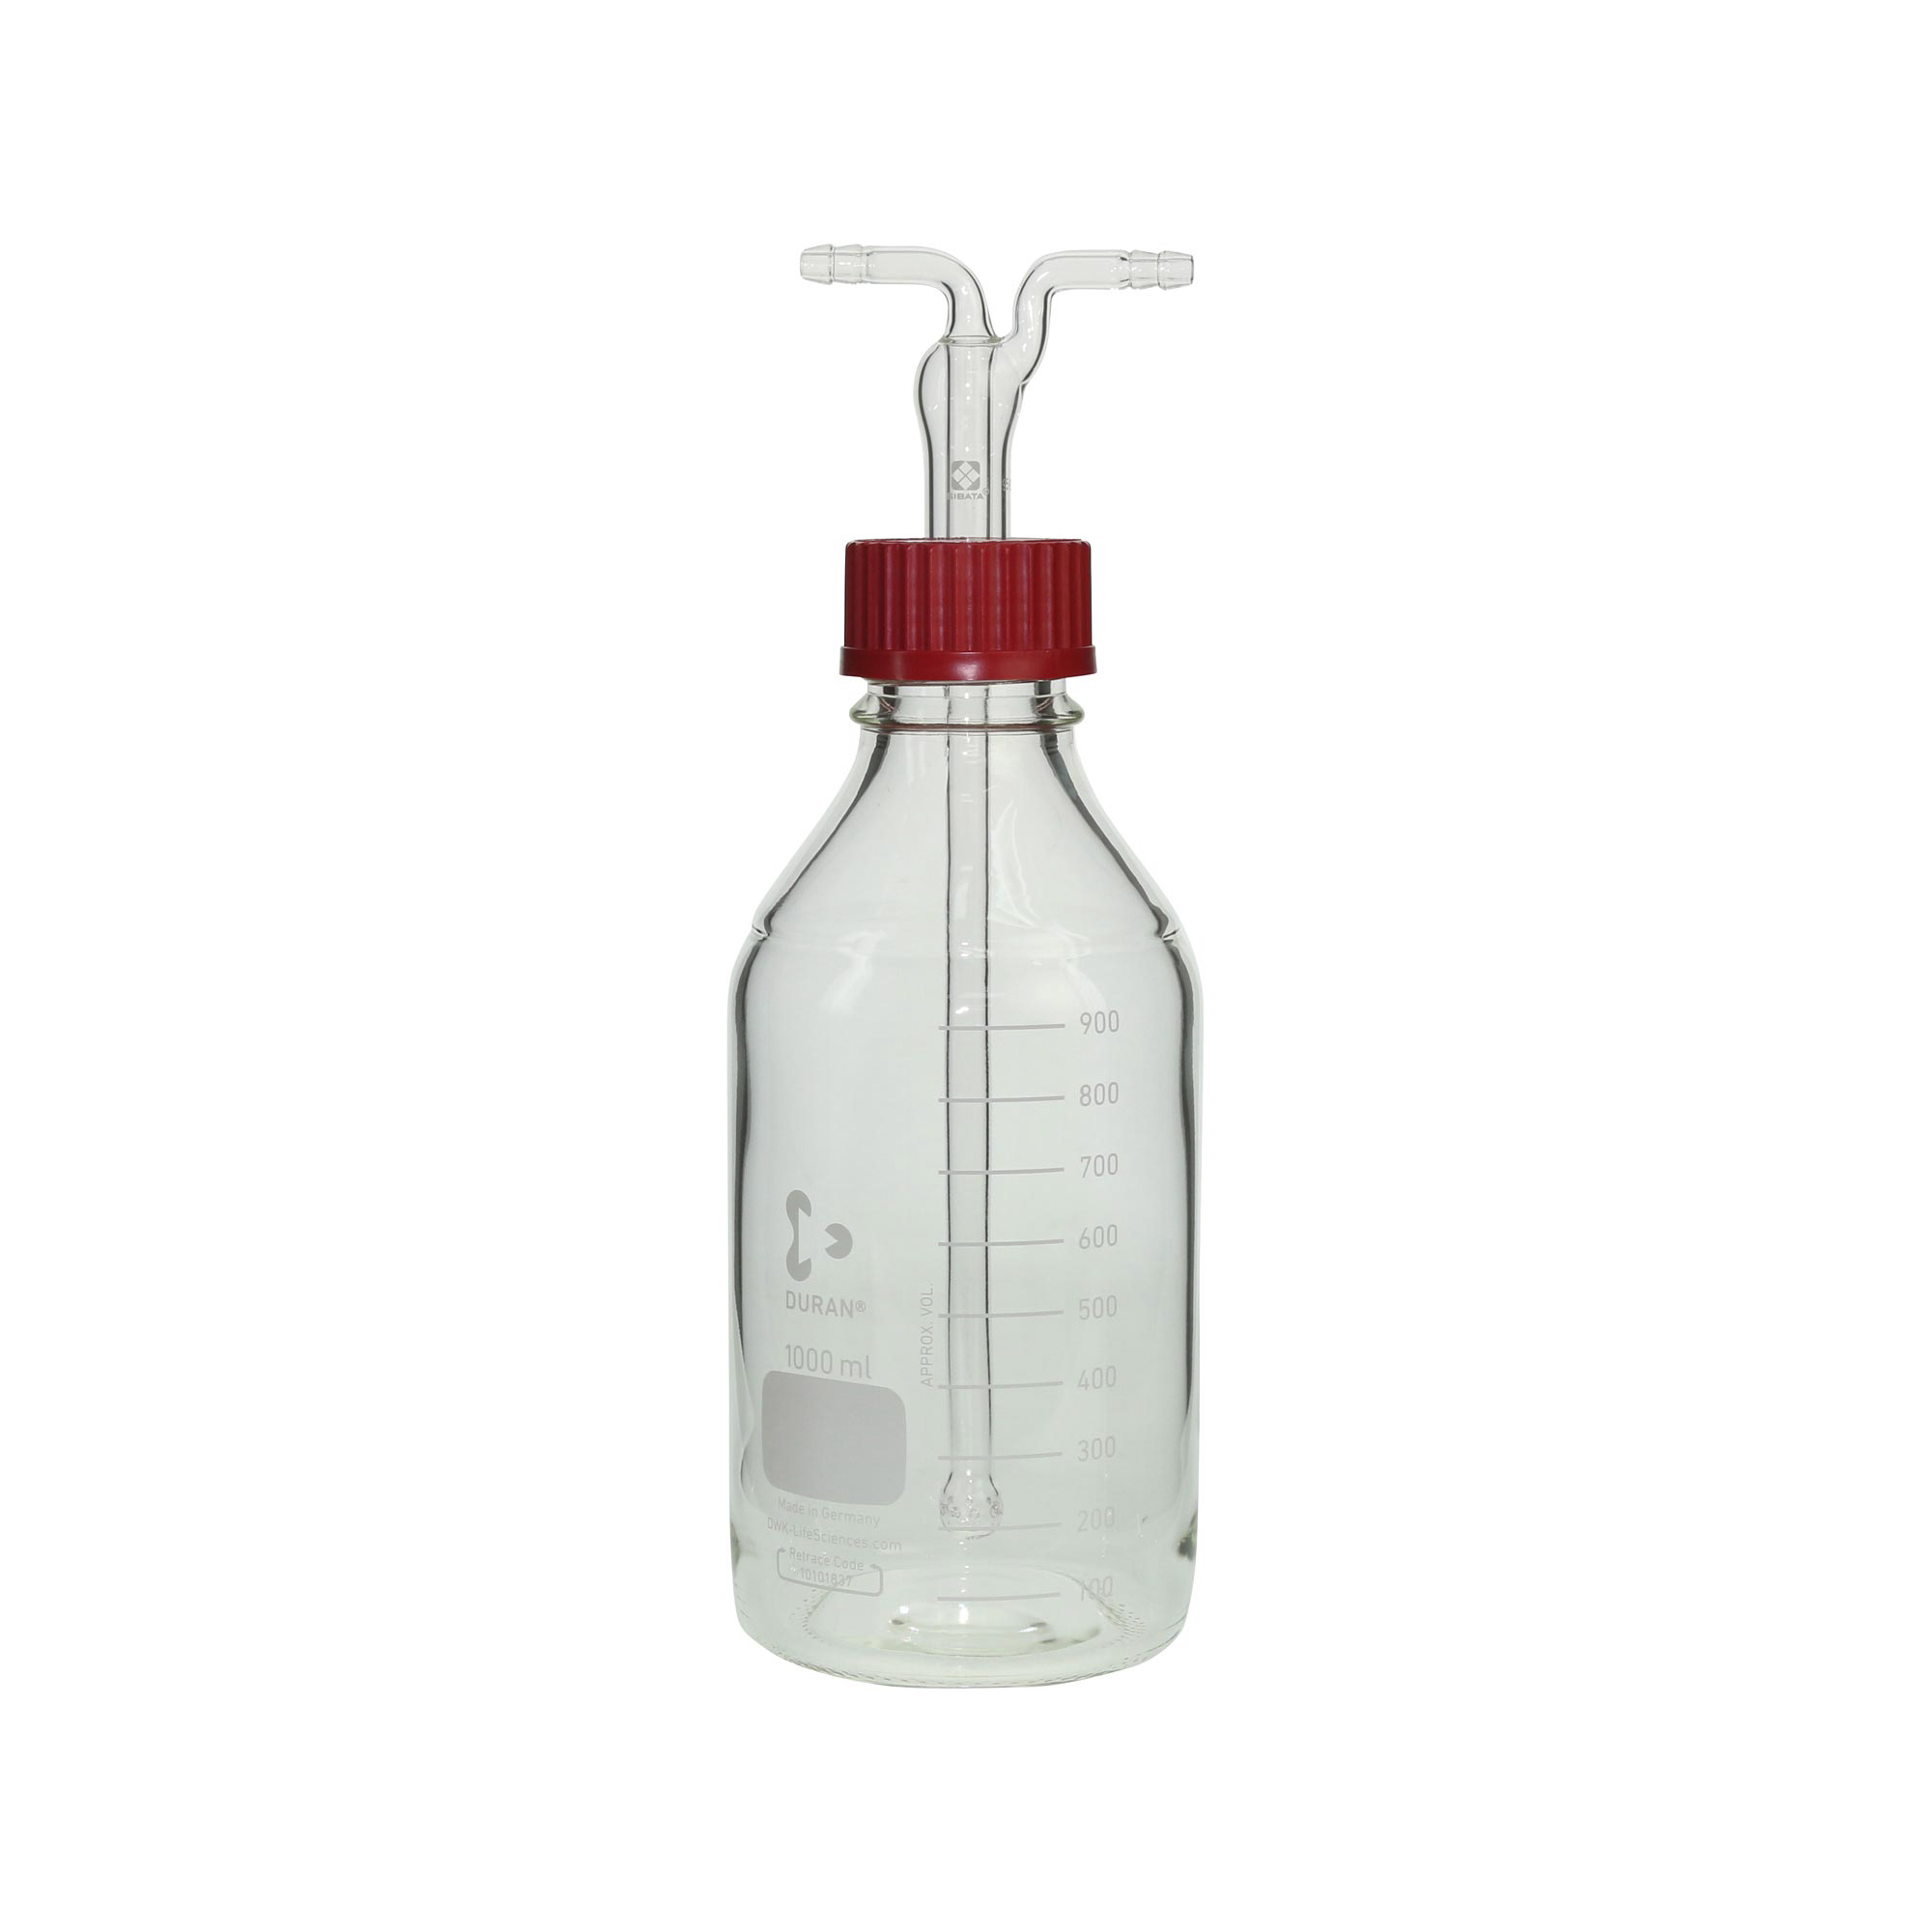 014670-1000 DURAN ねじ口洗浄瓶 ムエンケ式 1000mL GL-45 柴田科学(SIBATA) 印刷